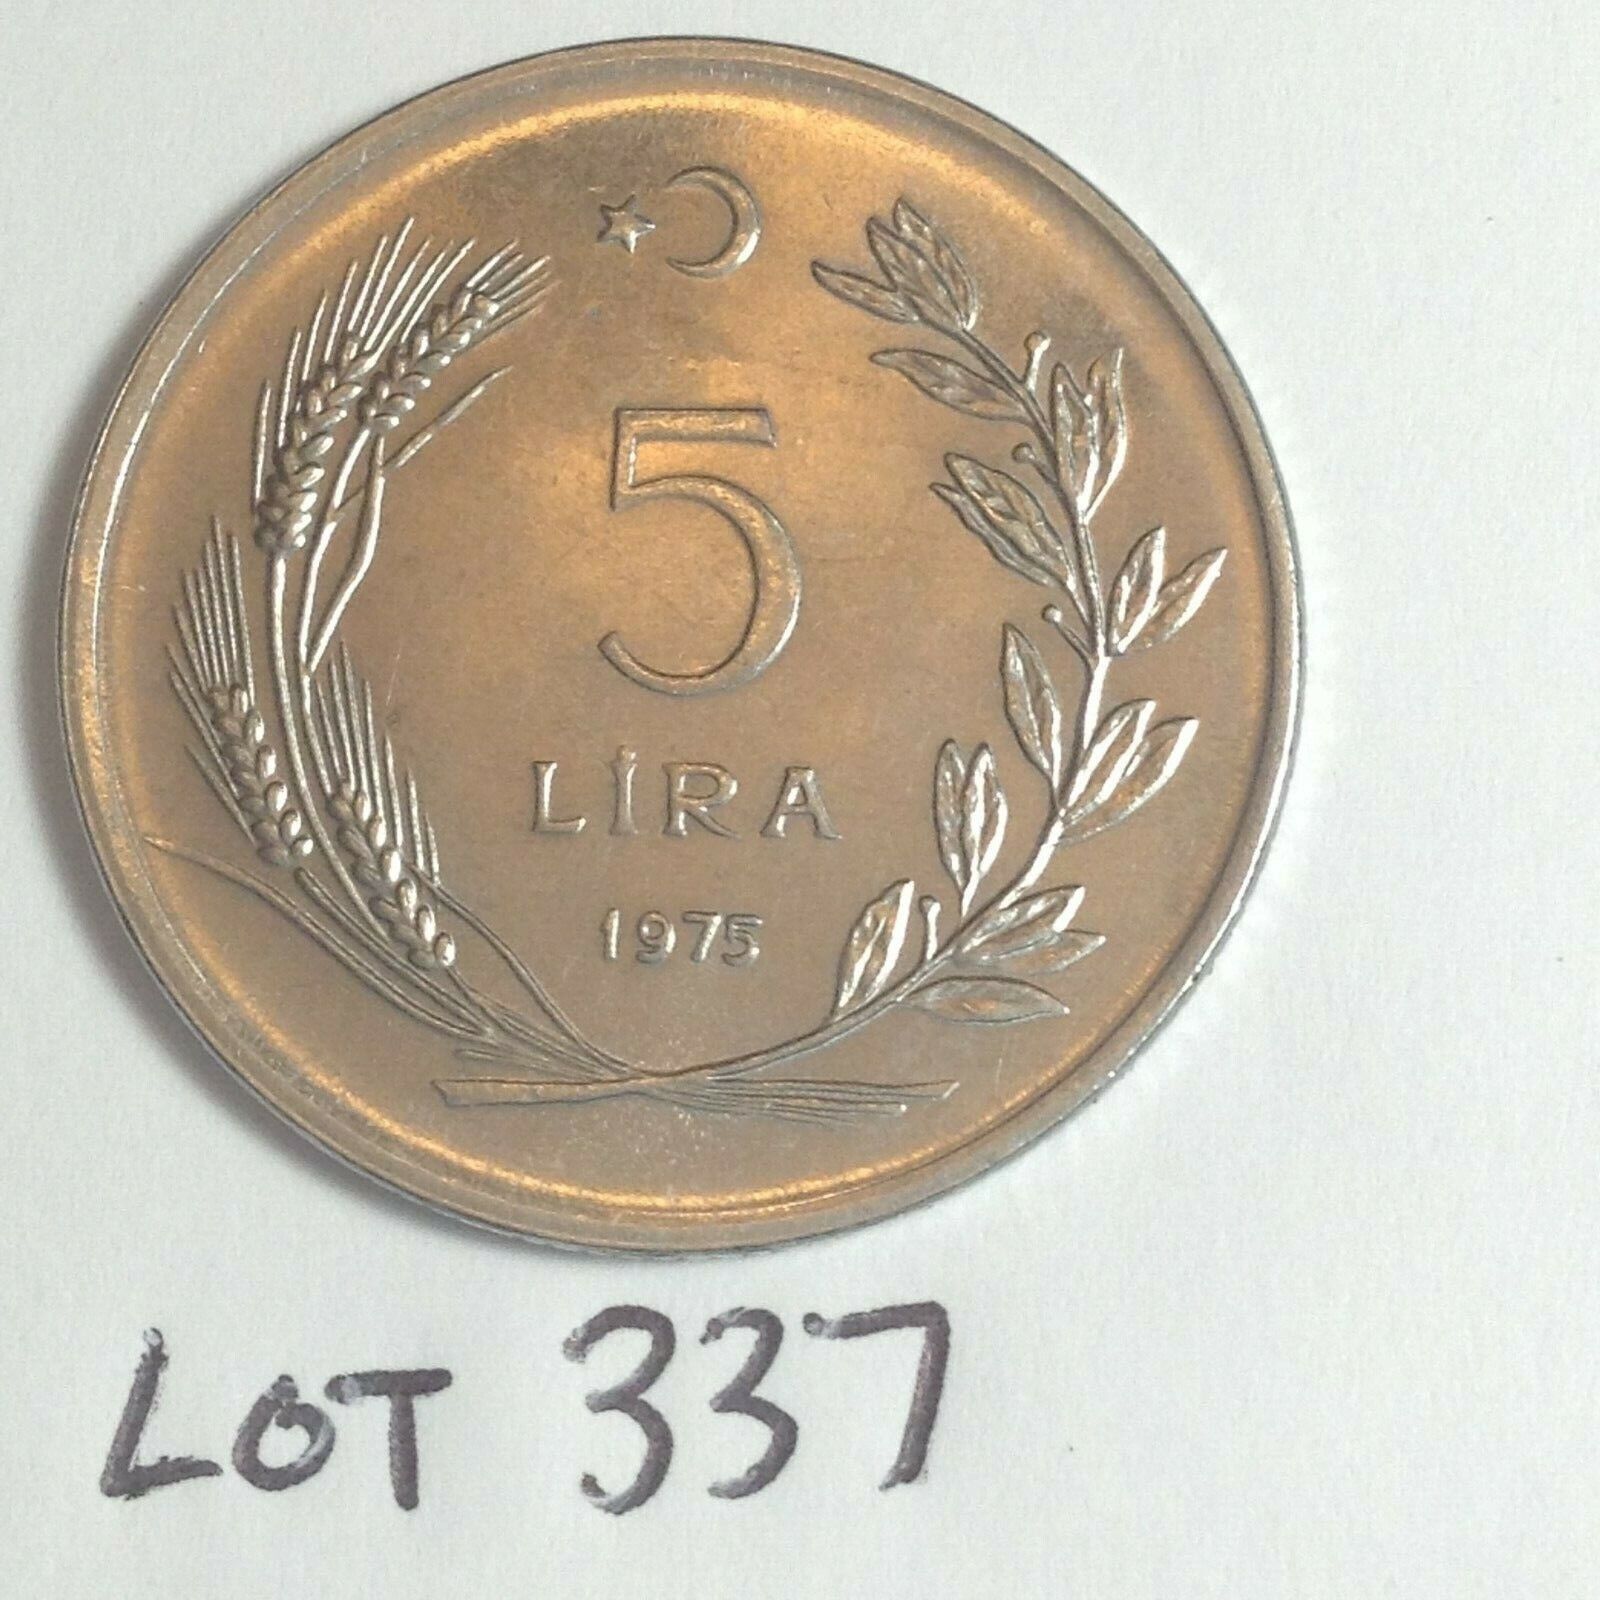 1975 TURKEY 5 LIRA COIN  LOT 337